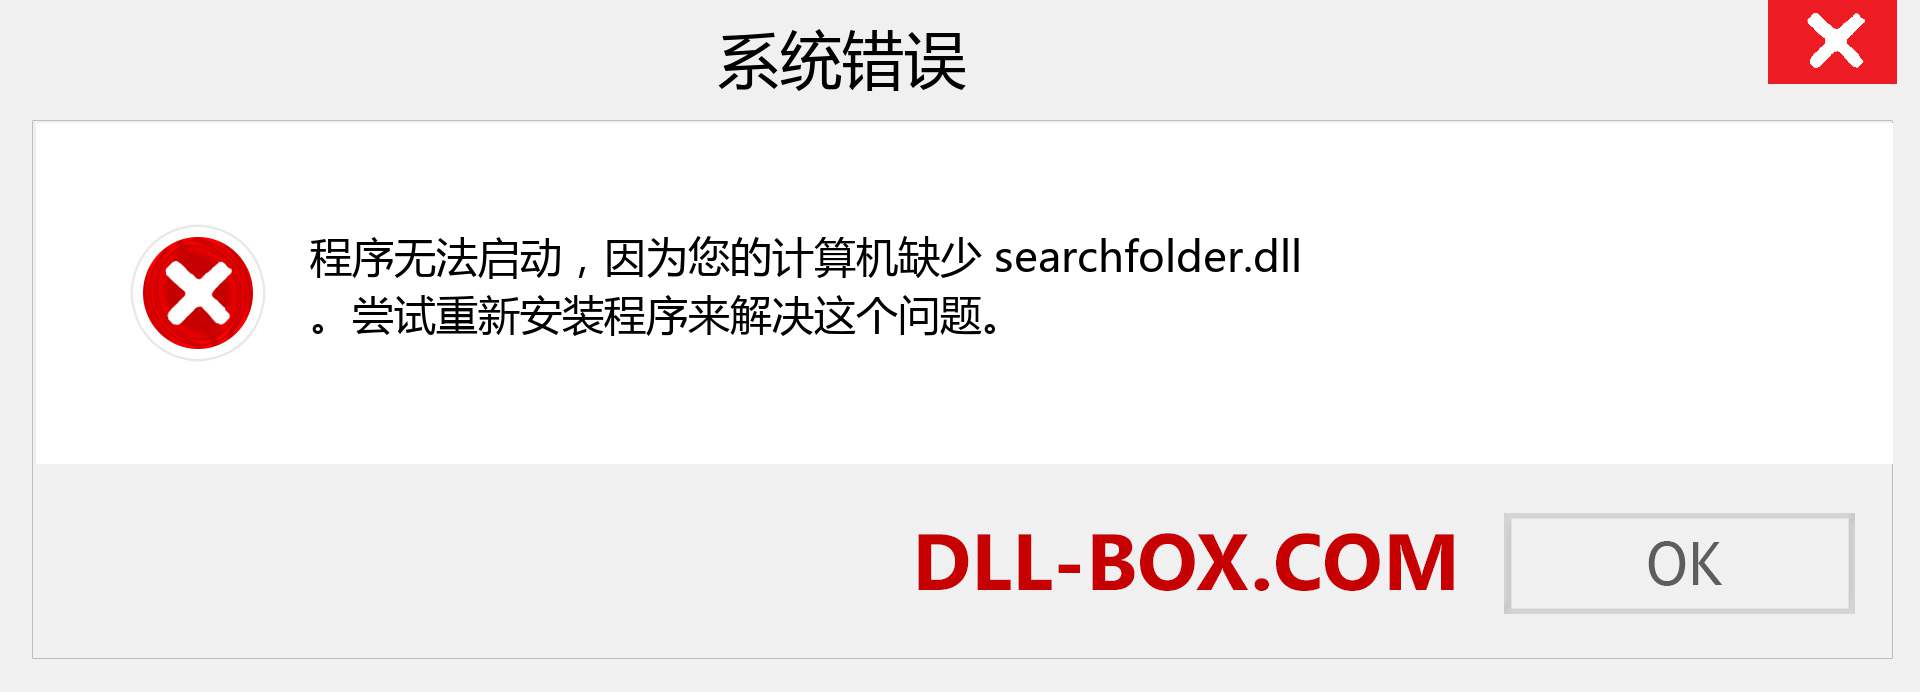 searchfolder.dll 文件丢失？。 适用于 Windows 7、8、10 的下载 - 修复 Windows、照片、图像上的 searchfolder dll 丢失错误